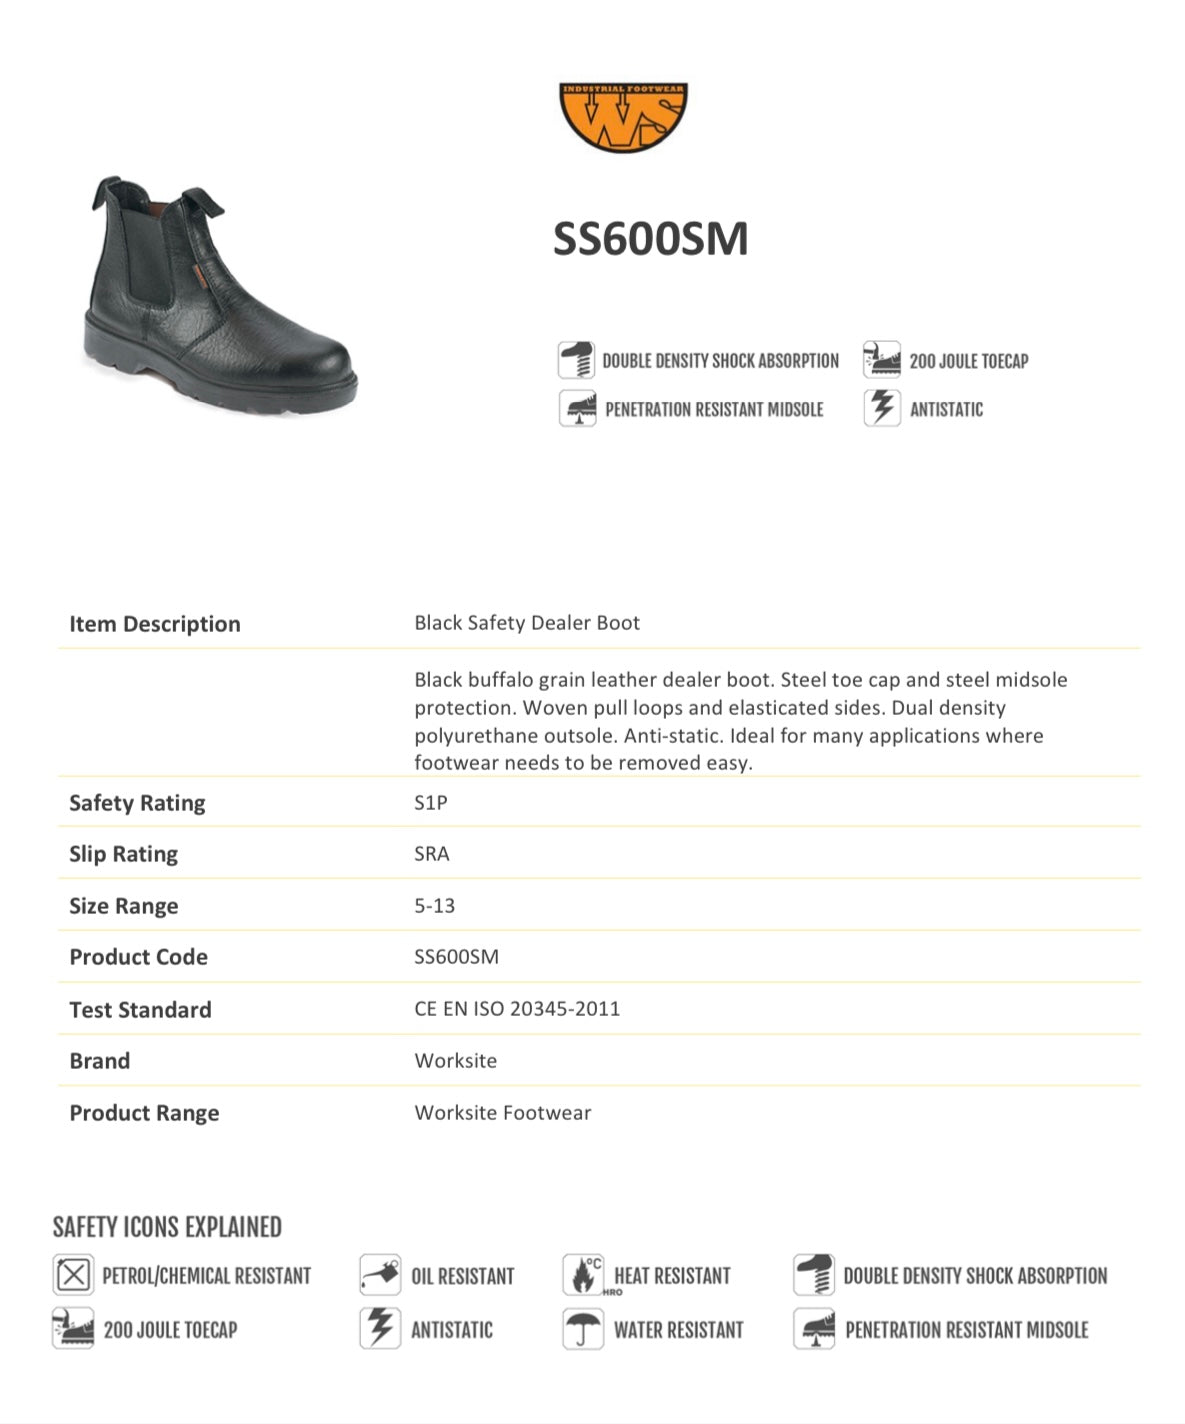 INDUSTRIAL FOOTWEAR 'SS600SM' SAFTEY BOOT